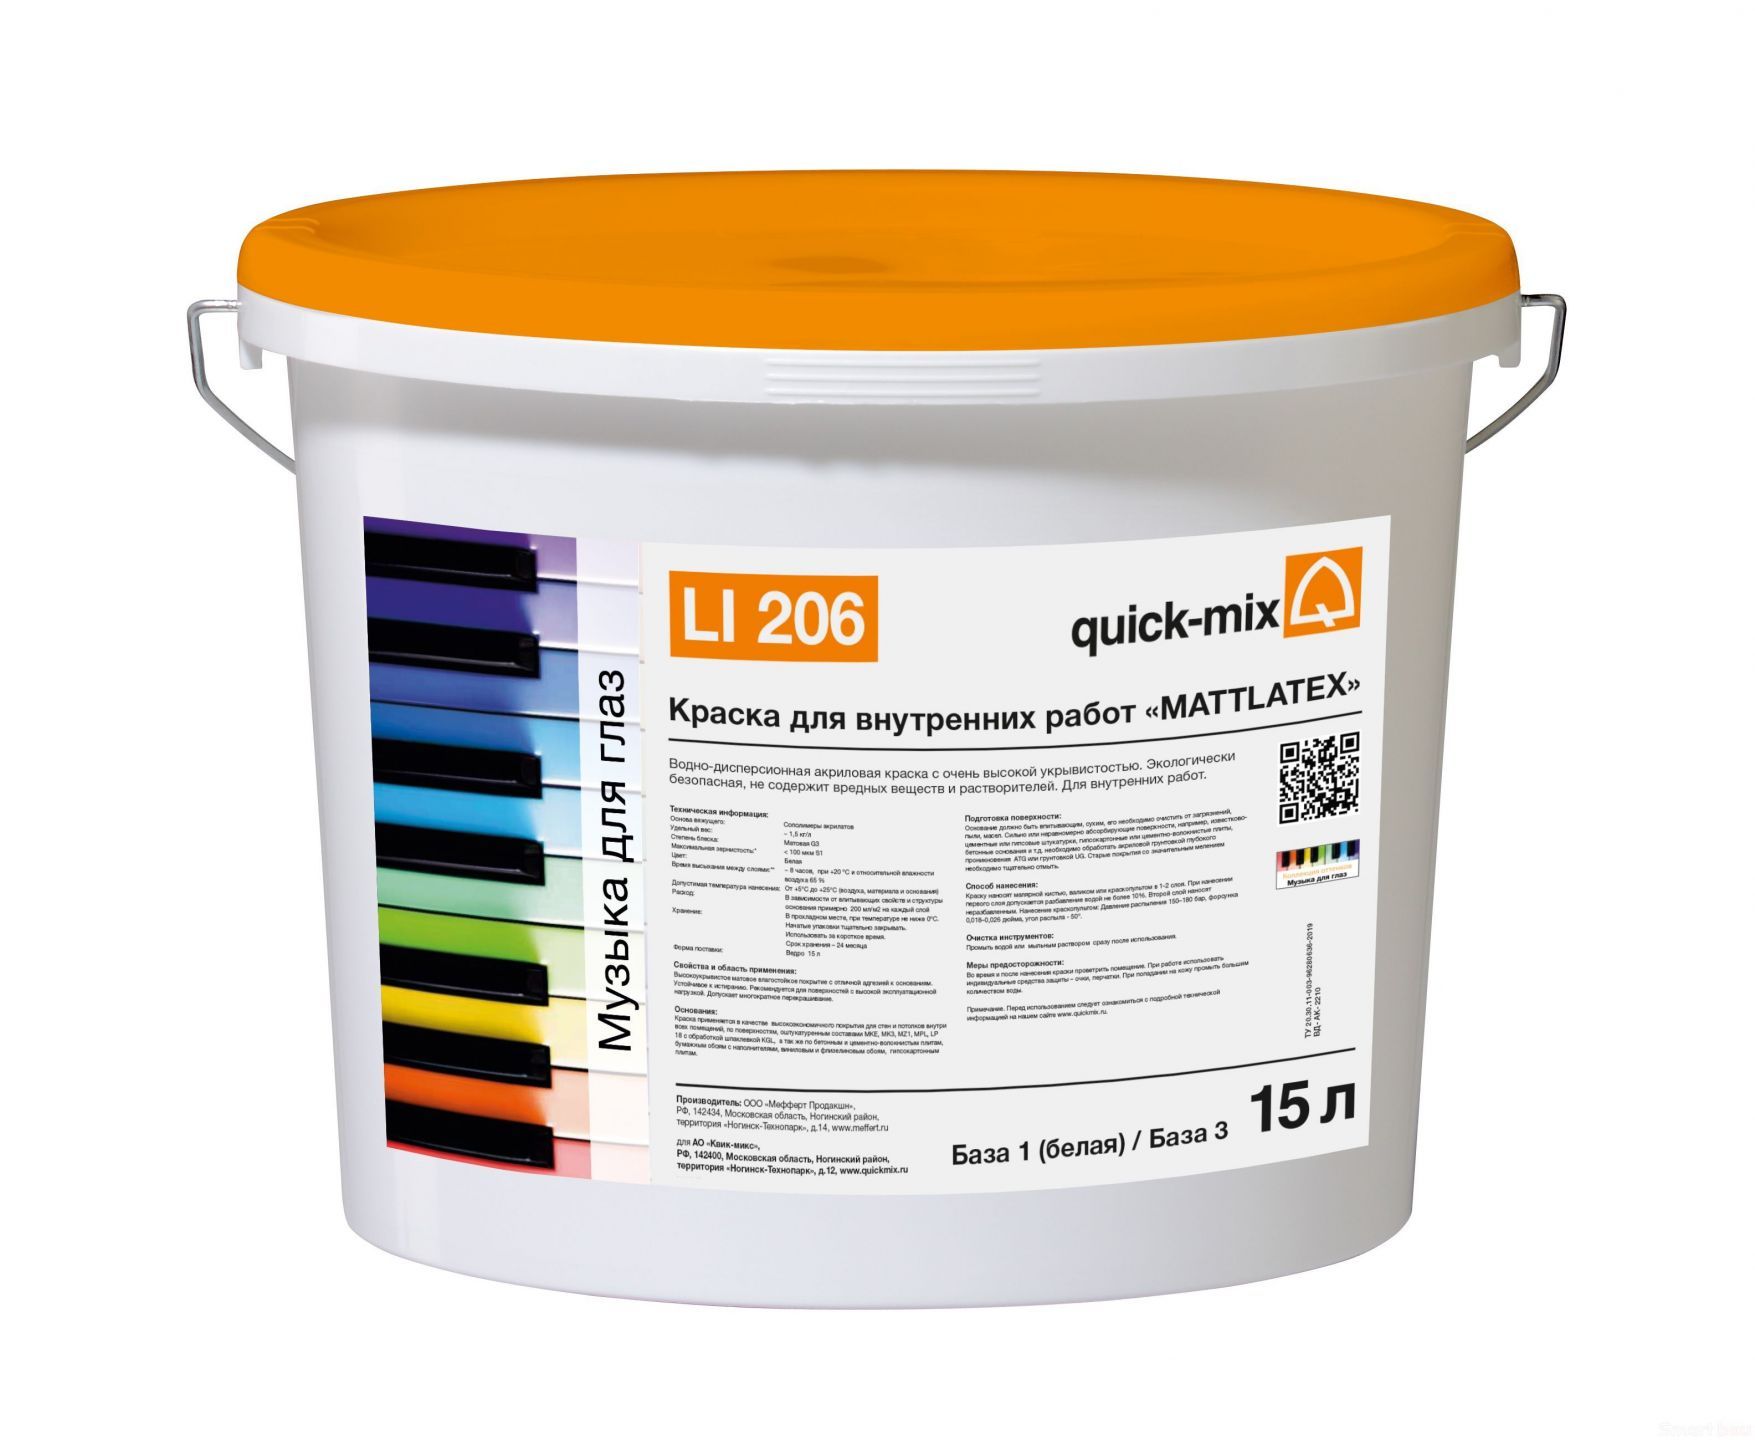 Краска для внутренних работ quick-mix Mattlatex LI 206 фото